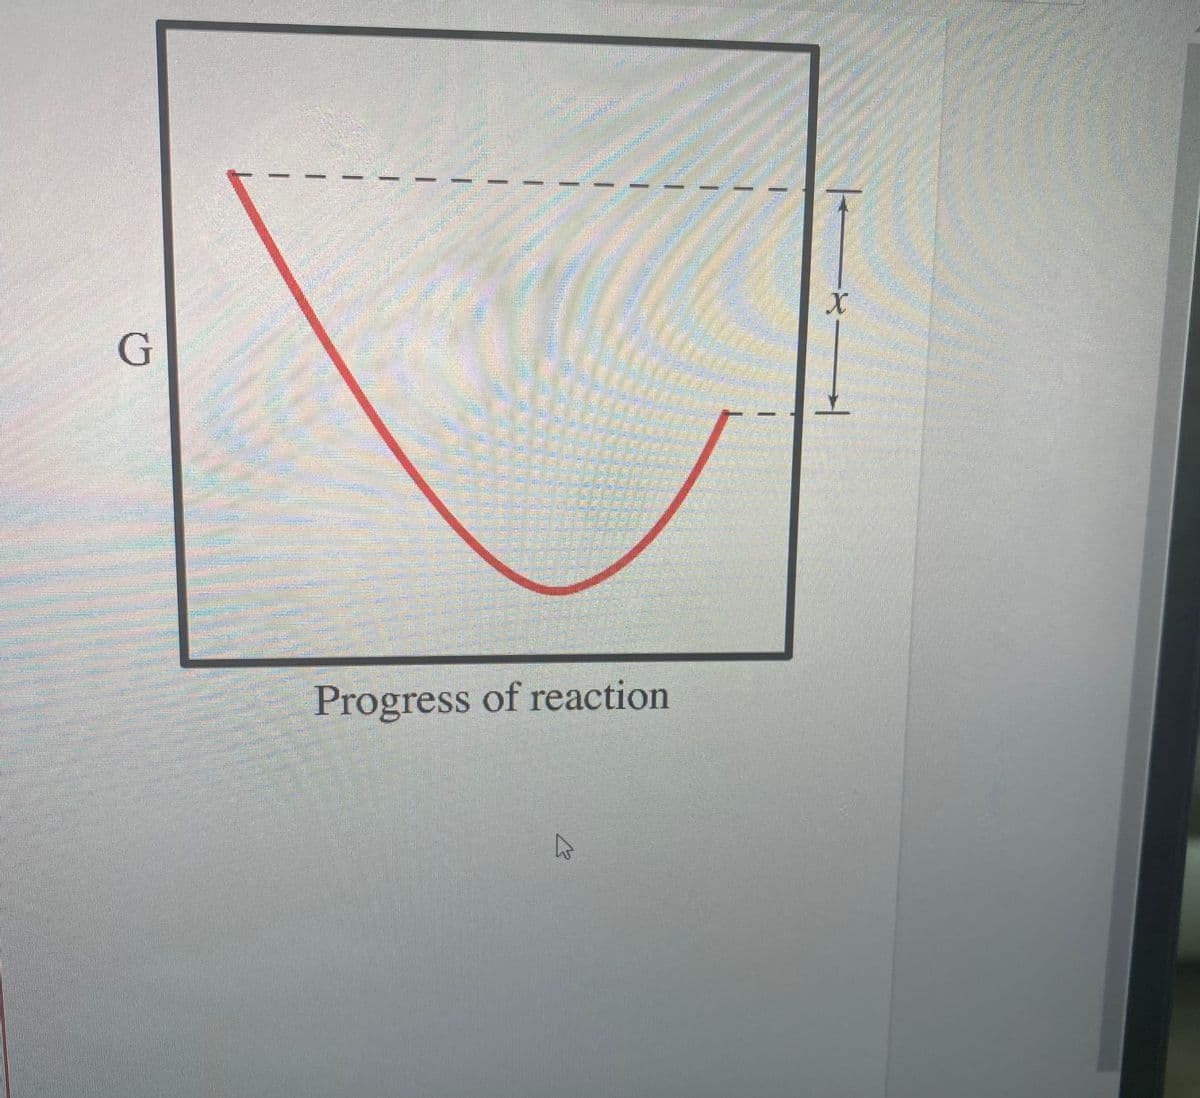 G
Pag
CAMERON
Progress of reaction
4
75
X